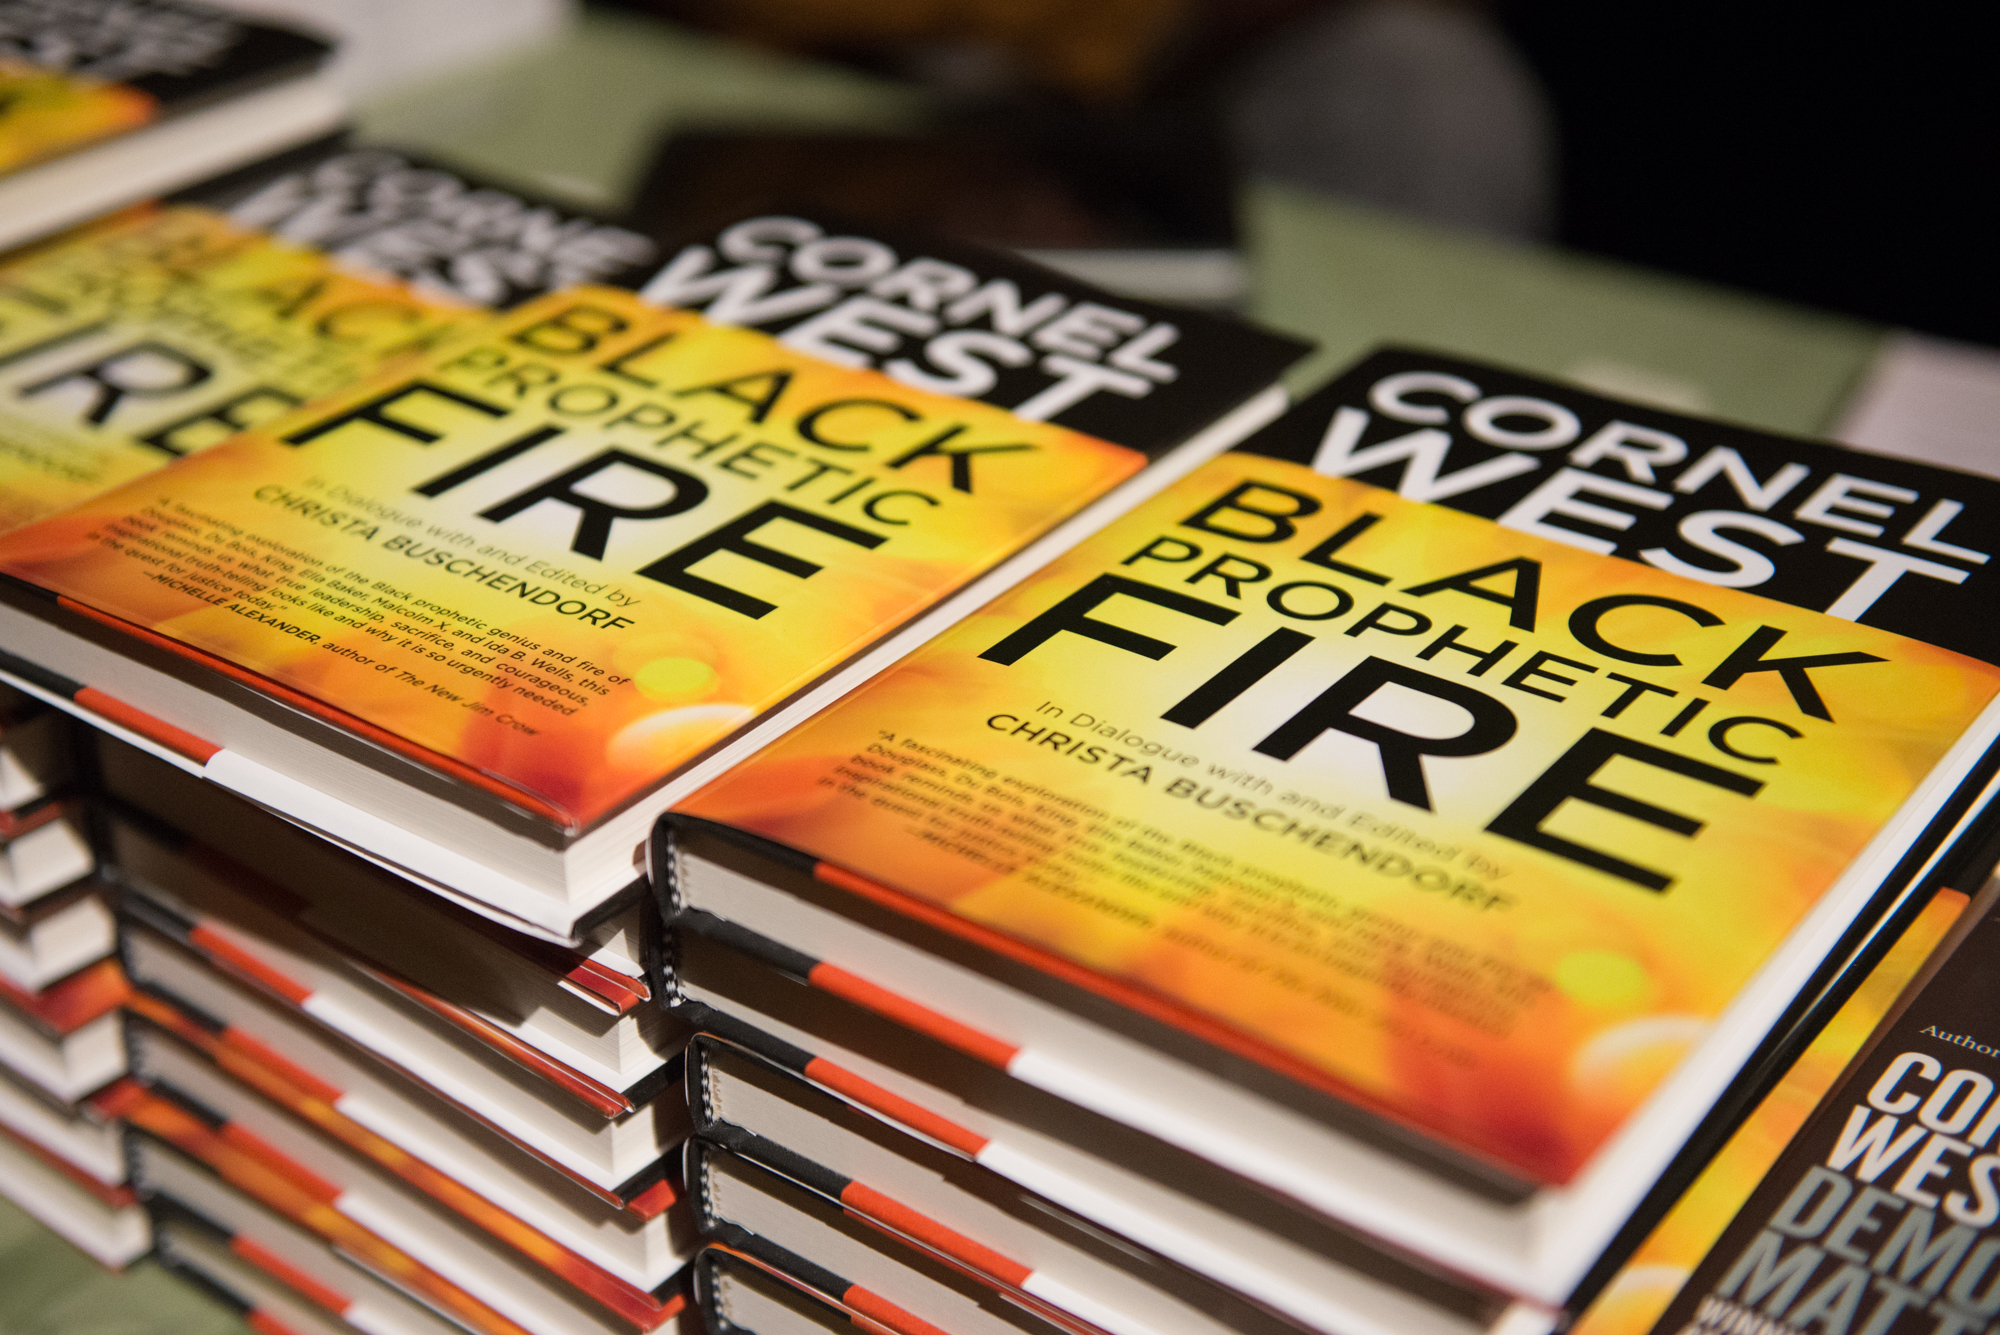 Dr. West's newest release, Black Prophetic Fire. Photo by Morgen Schuler